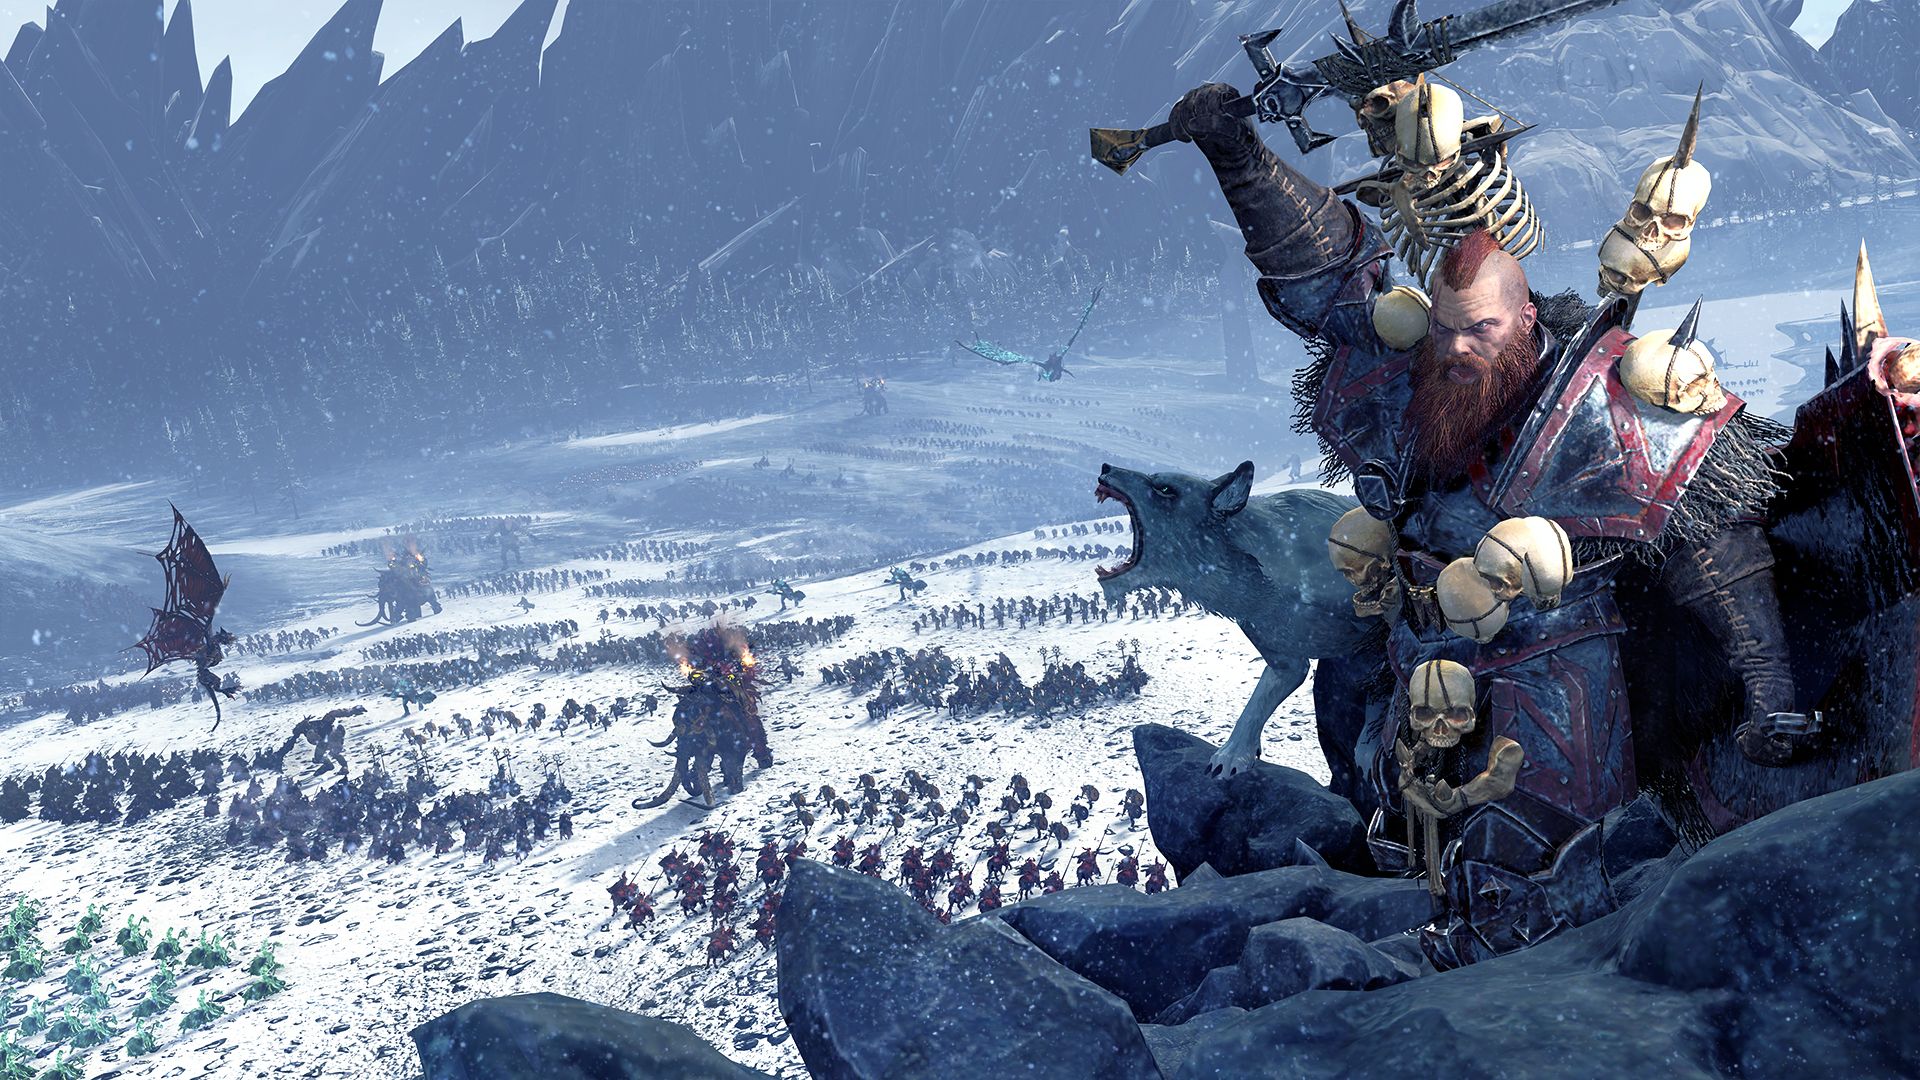 Descargar fondos de escritorio de Norsca (Total War: Warhammer) HD